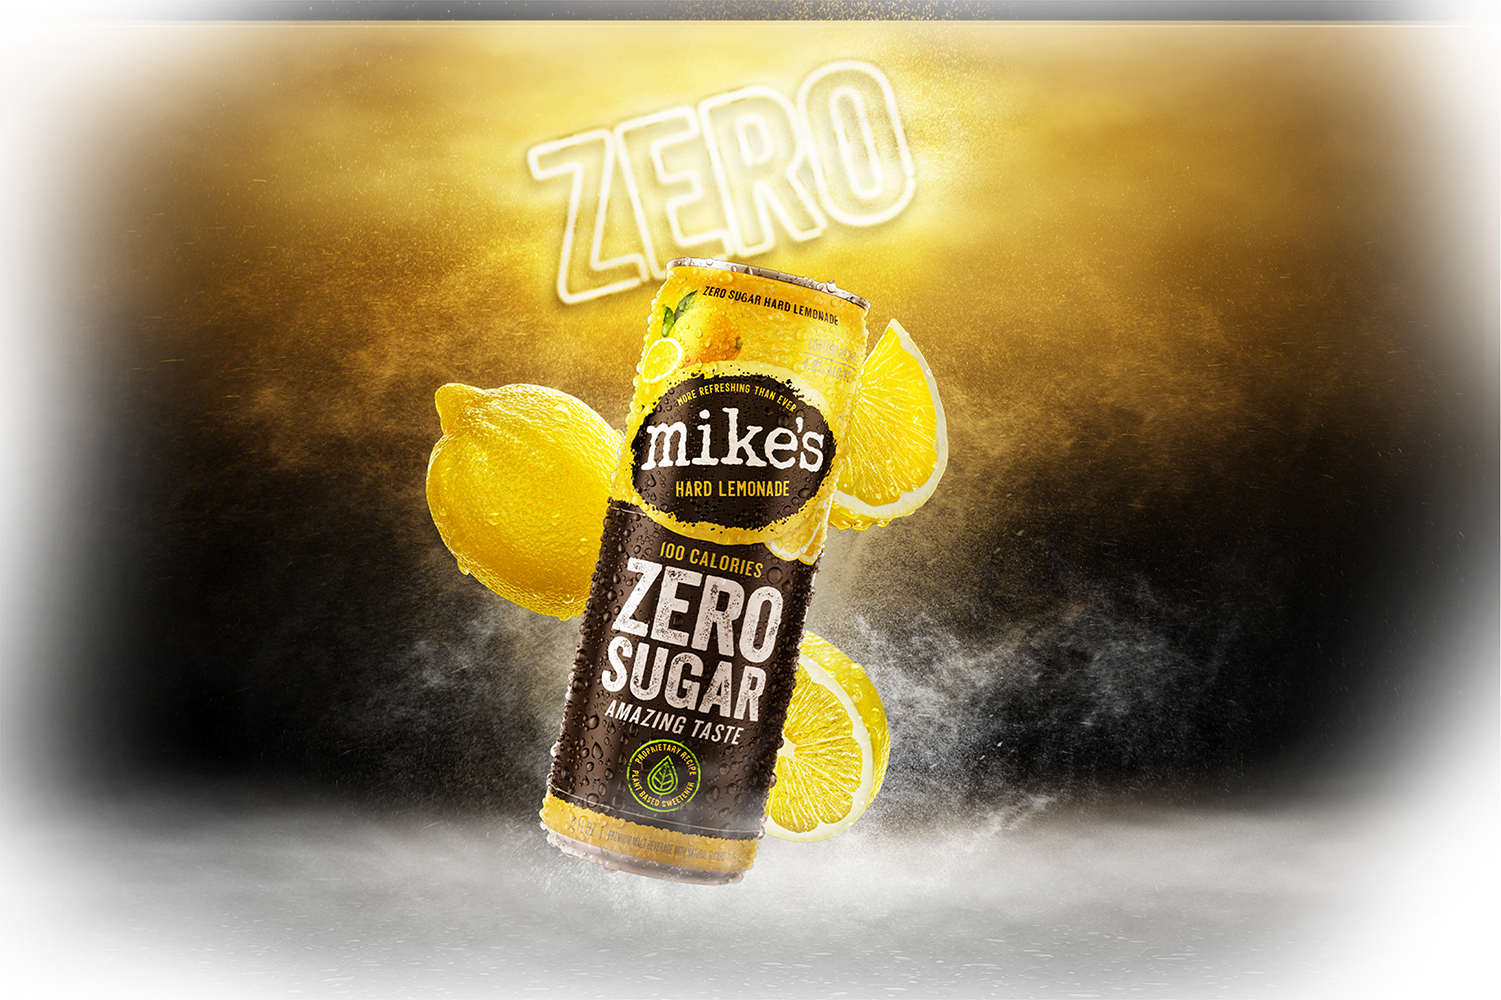 Mike's Hard Zero Sugar